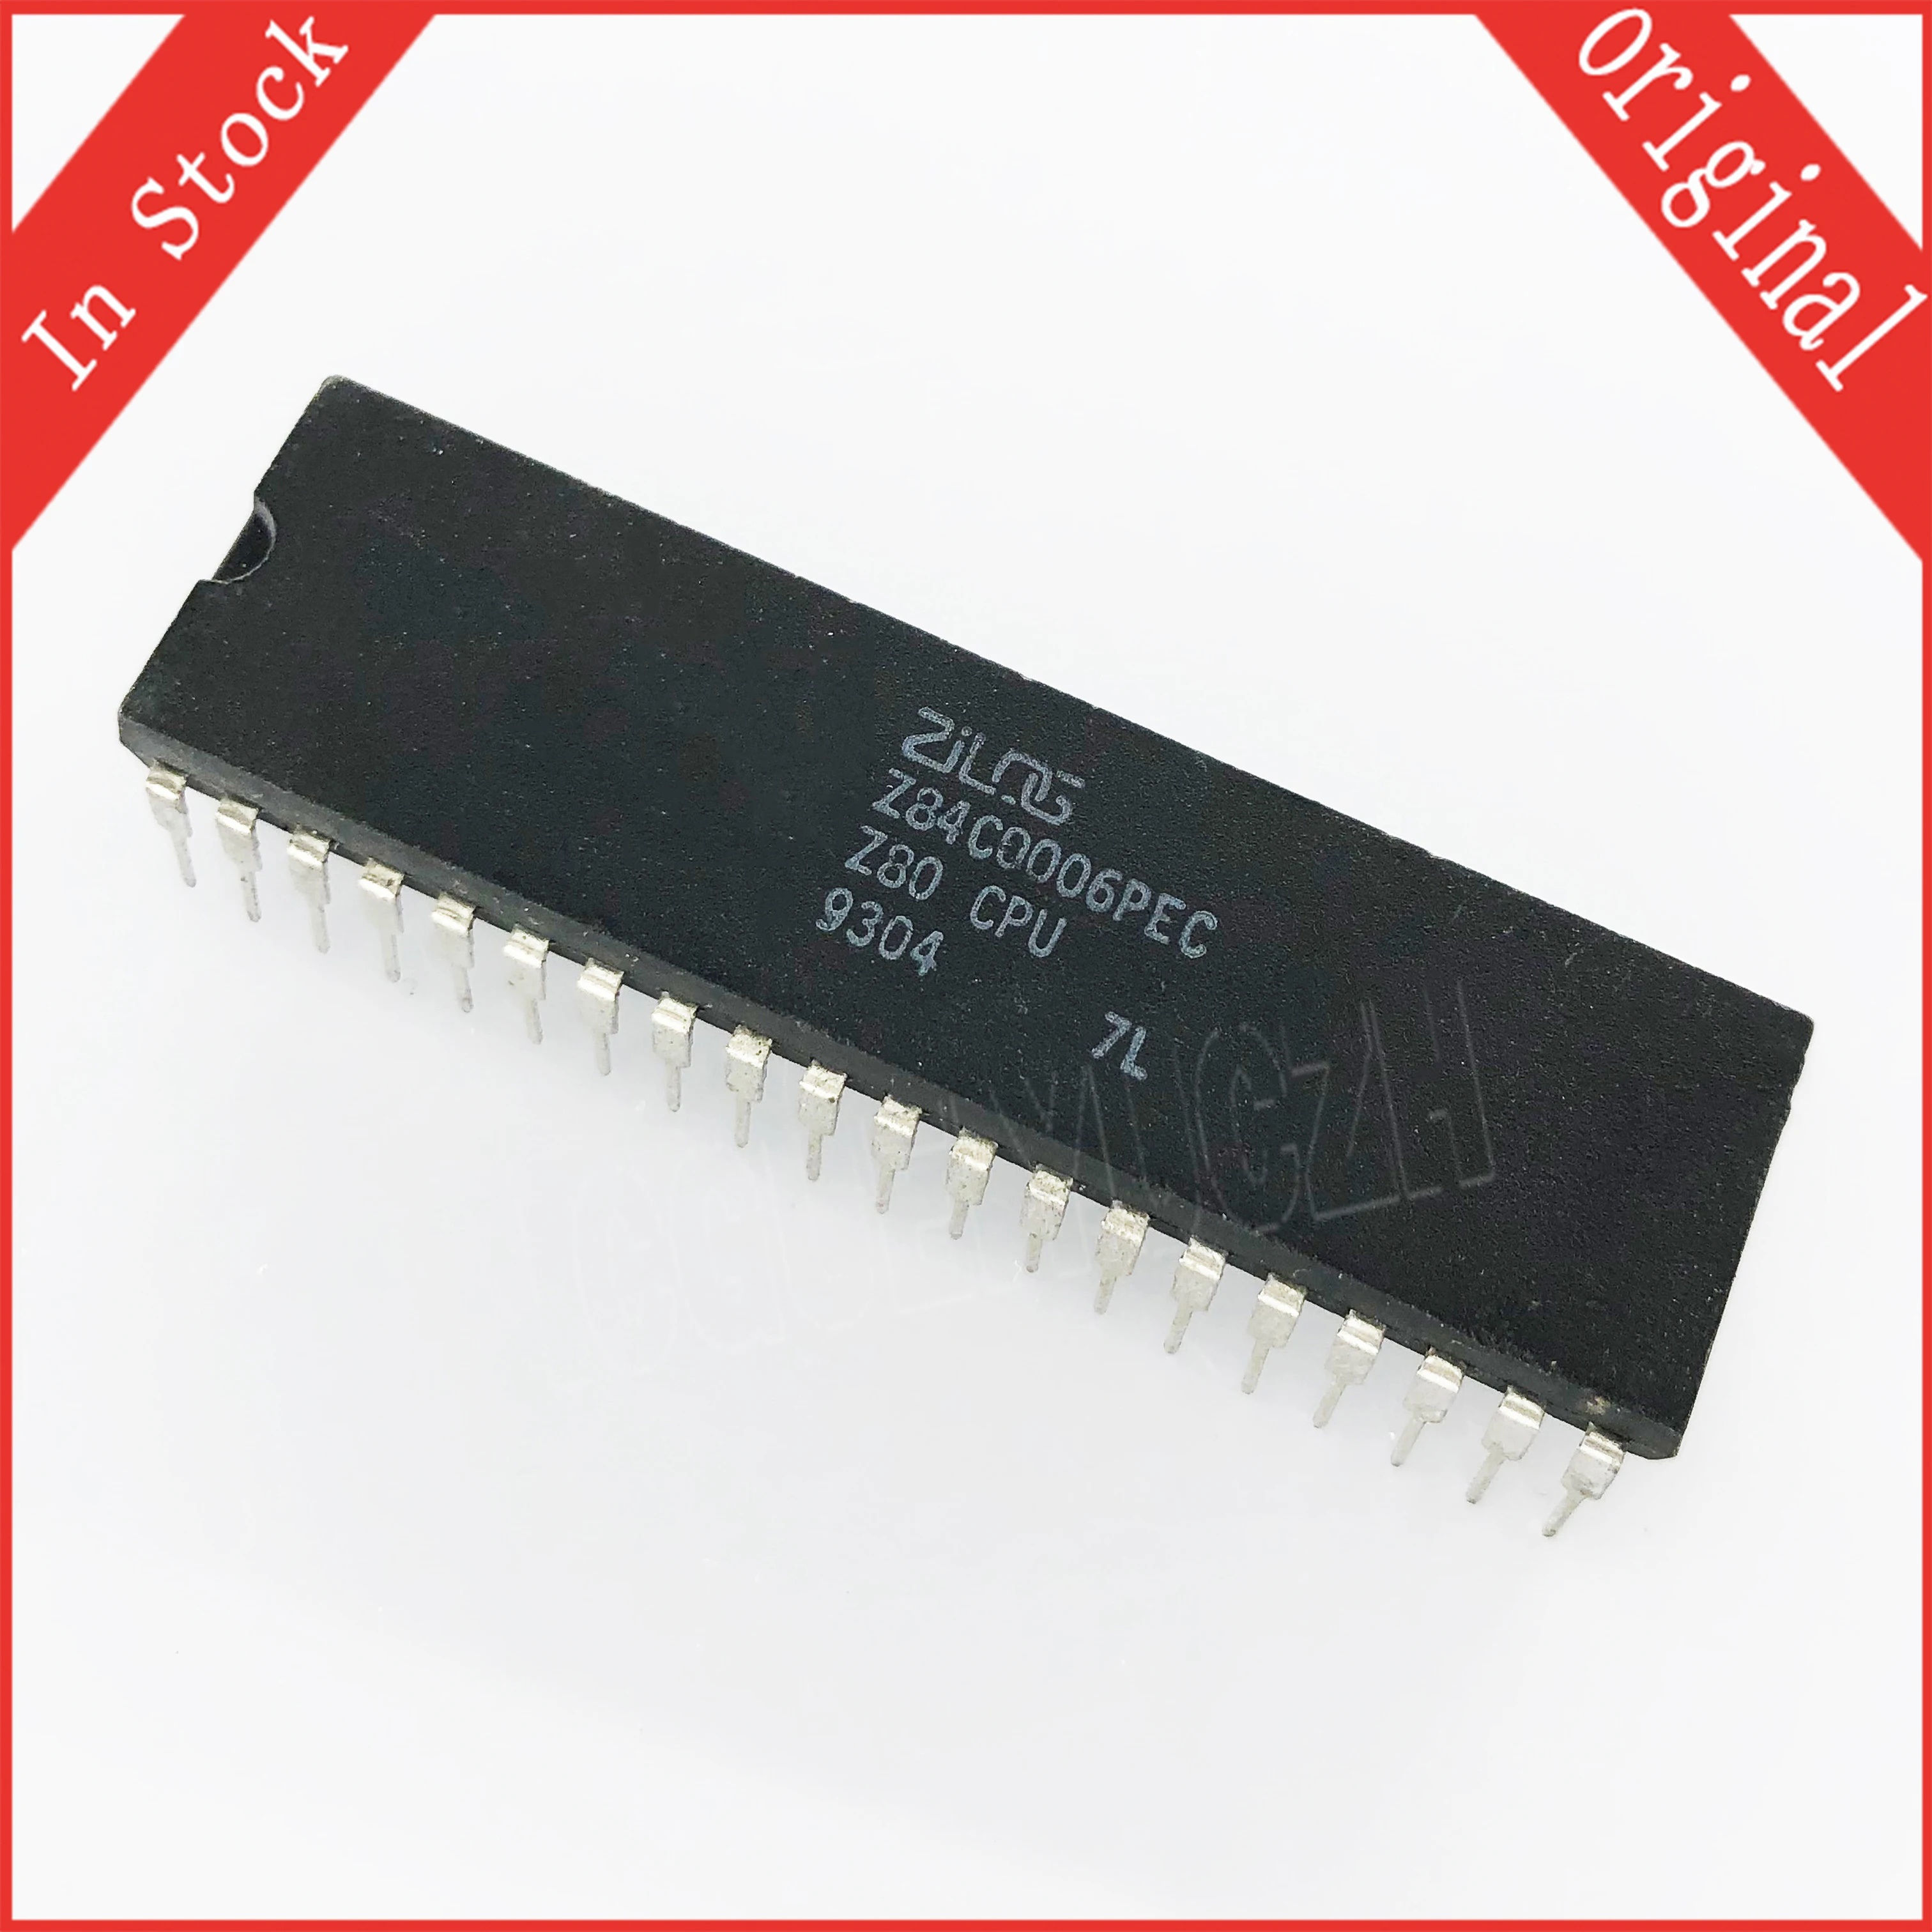 1PCS Z84C0010PEC NMOS/CMOS Z80 CPU CENTRAL PROCESSING UNIT new 